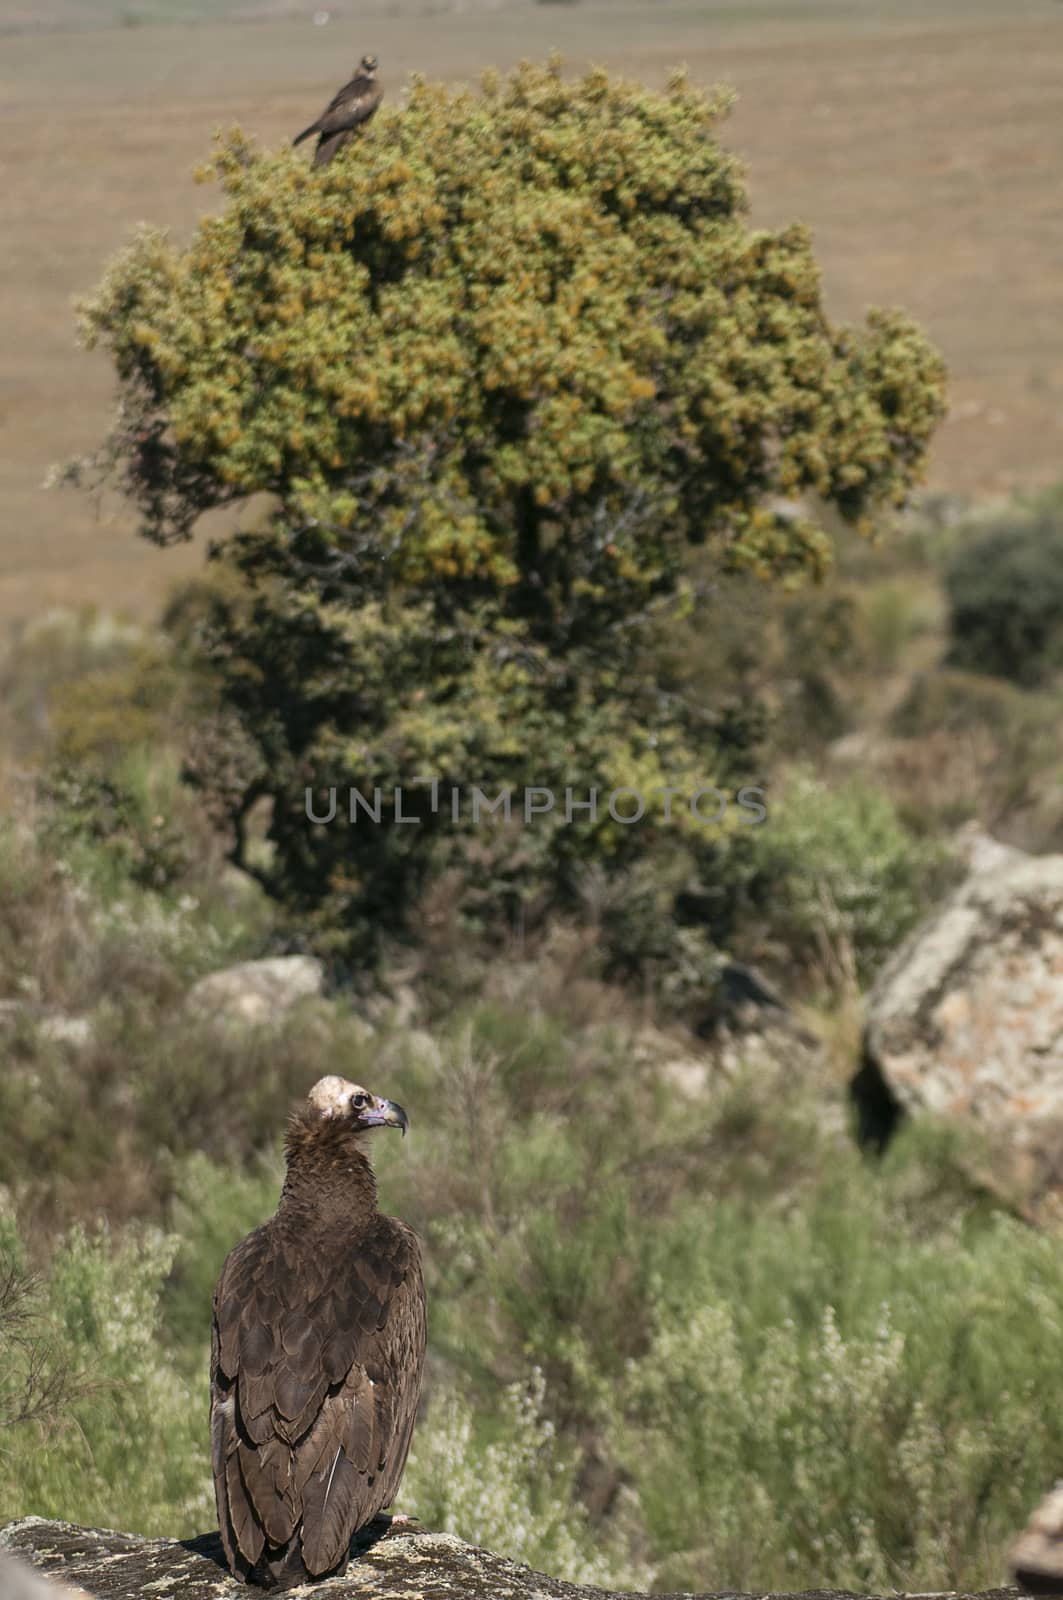 Cinereous (Eurasian Black) Vulture (Aegypius monachus) and Black by jalonsohu@gmail.com